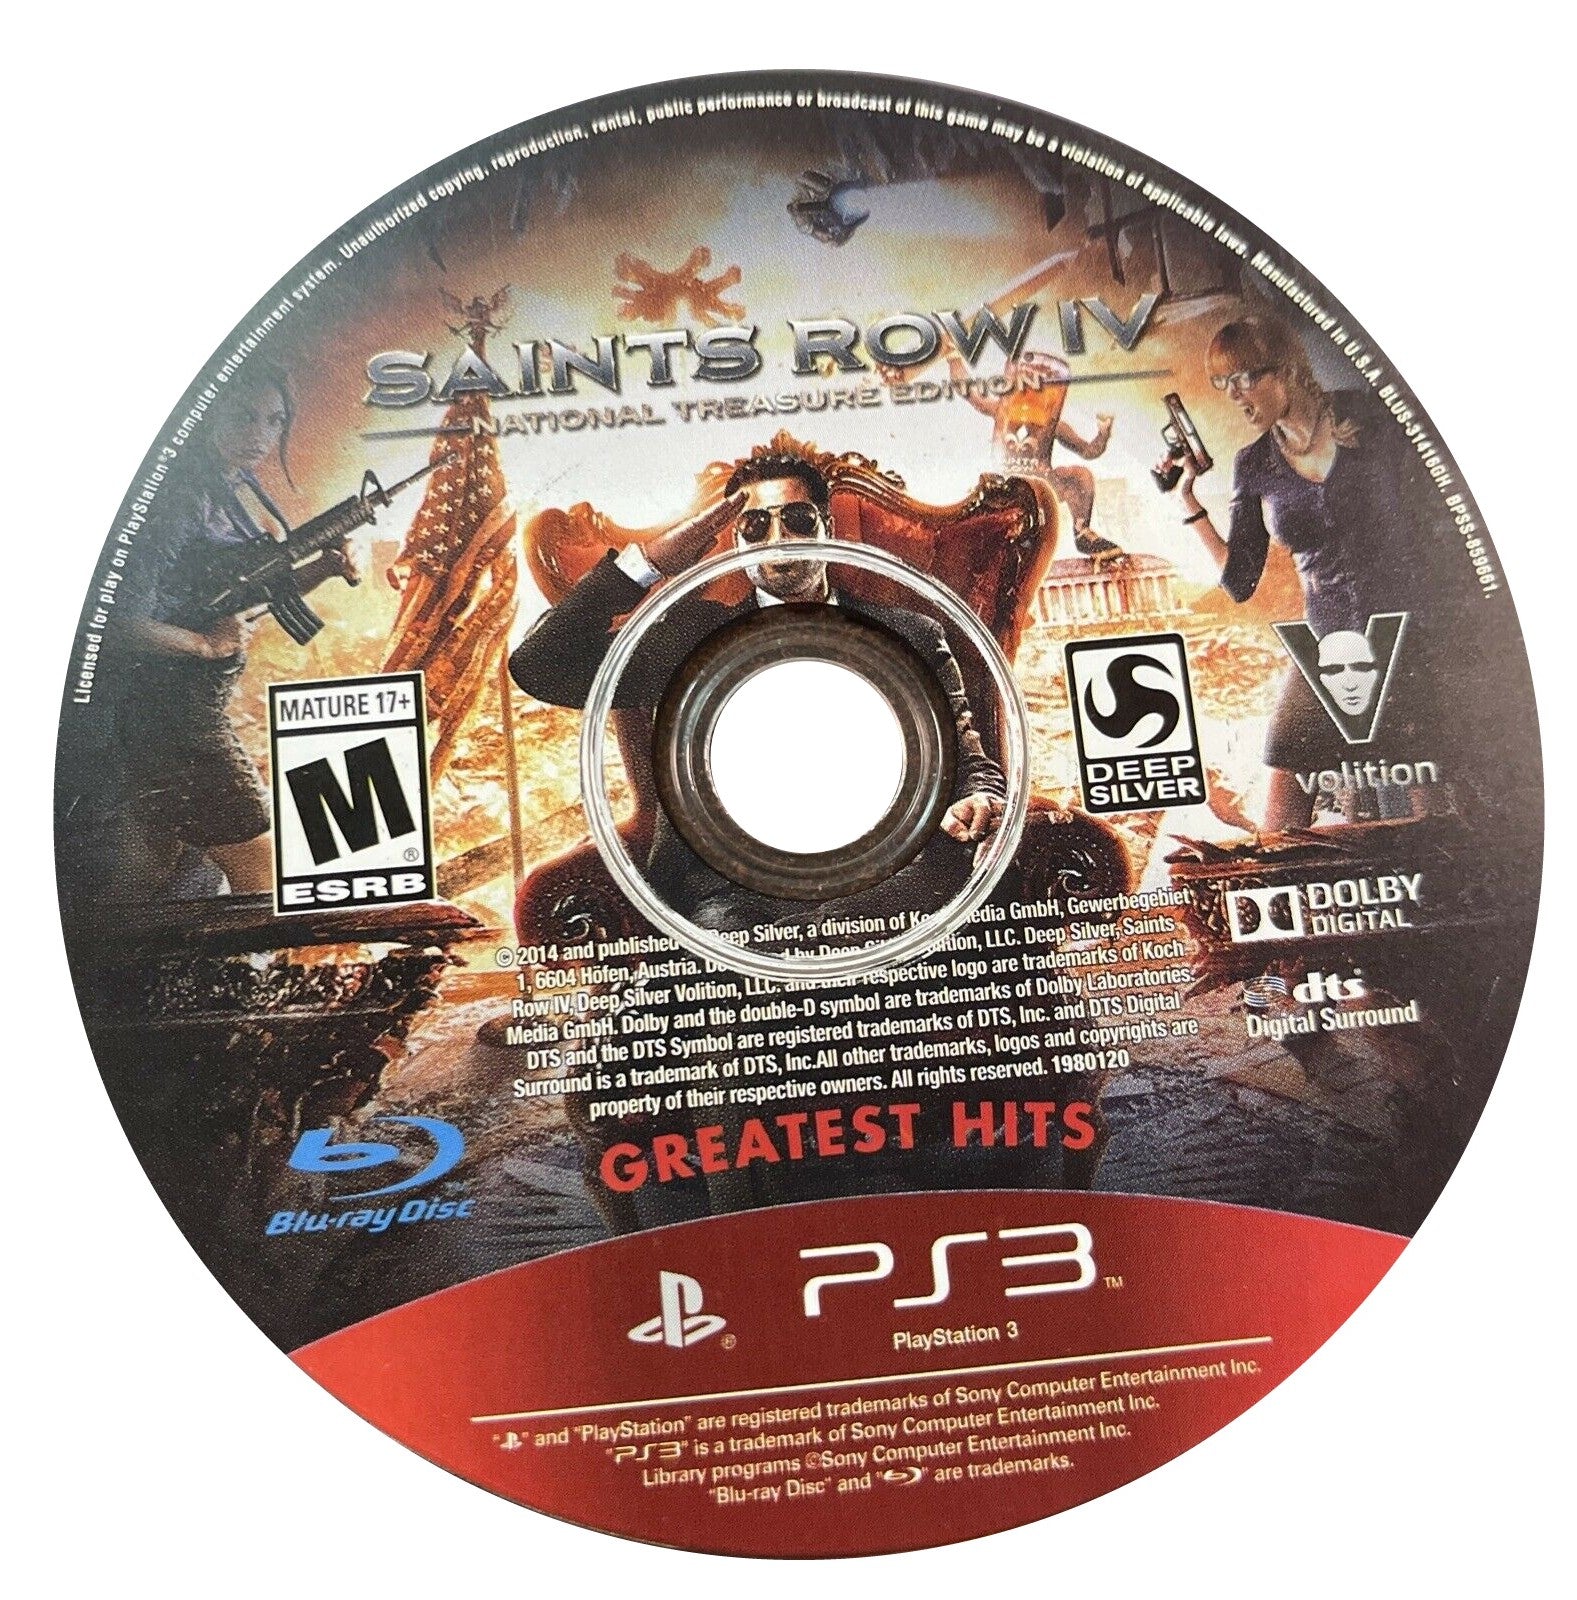 Saints Row IV: National Treasure Edition (Greatest Hits) - PlayStation 3 (PS3) Game